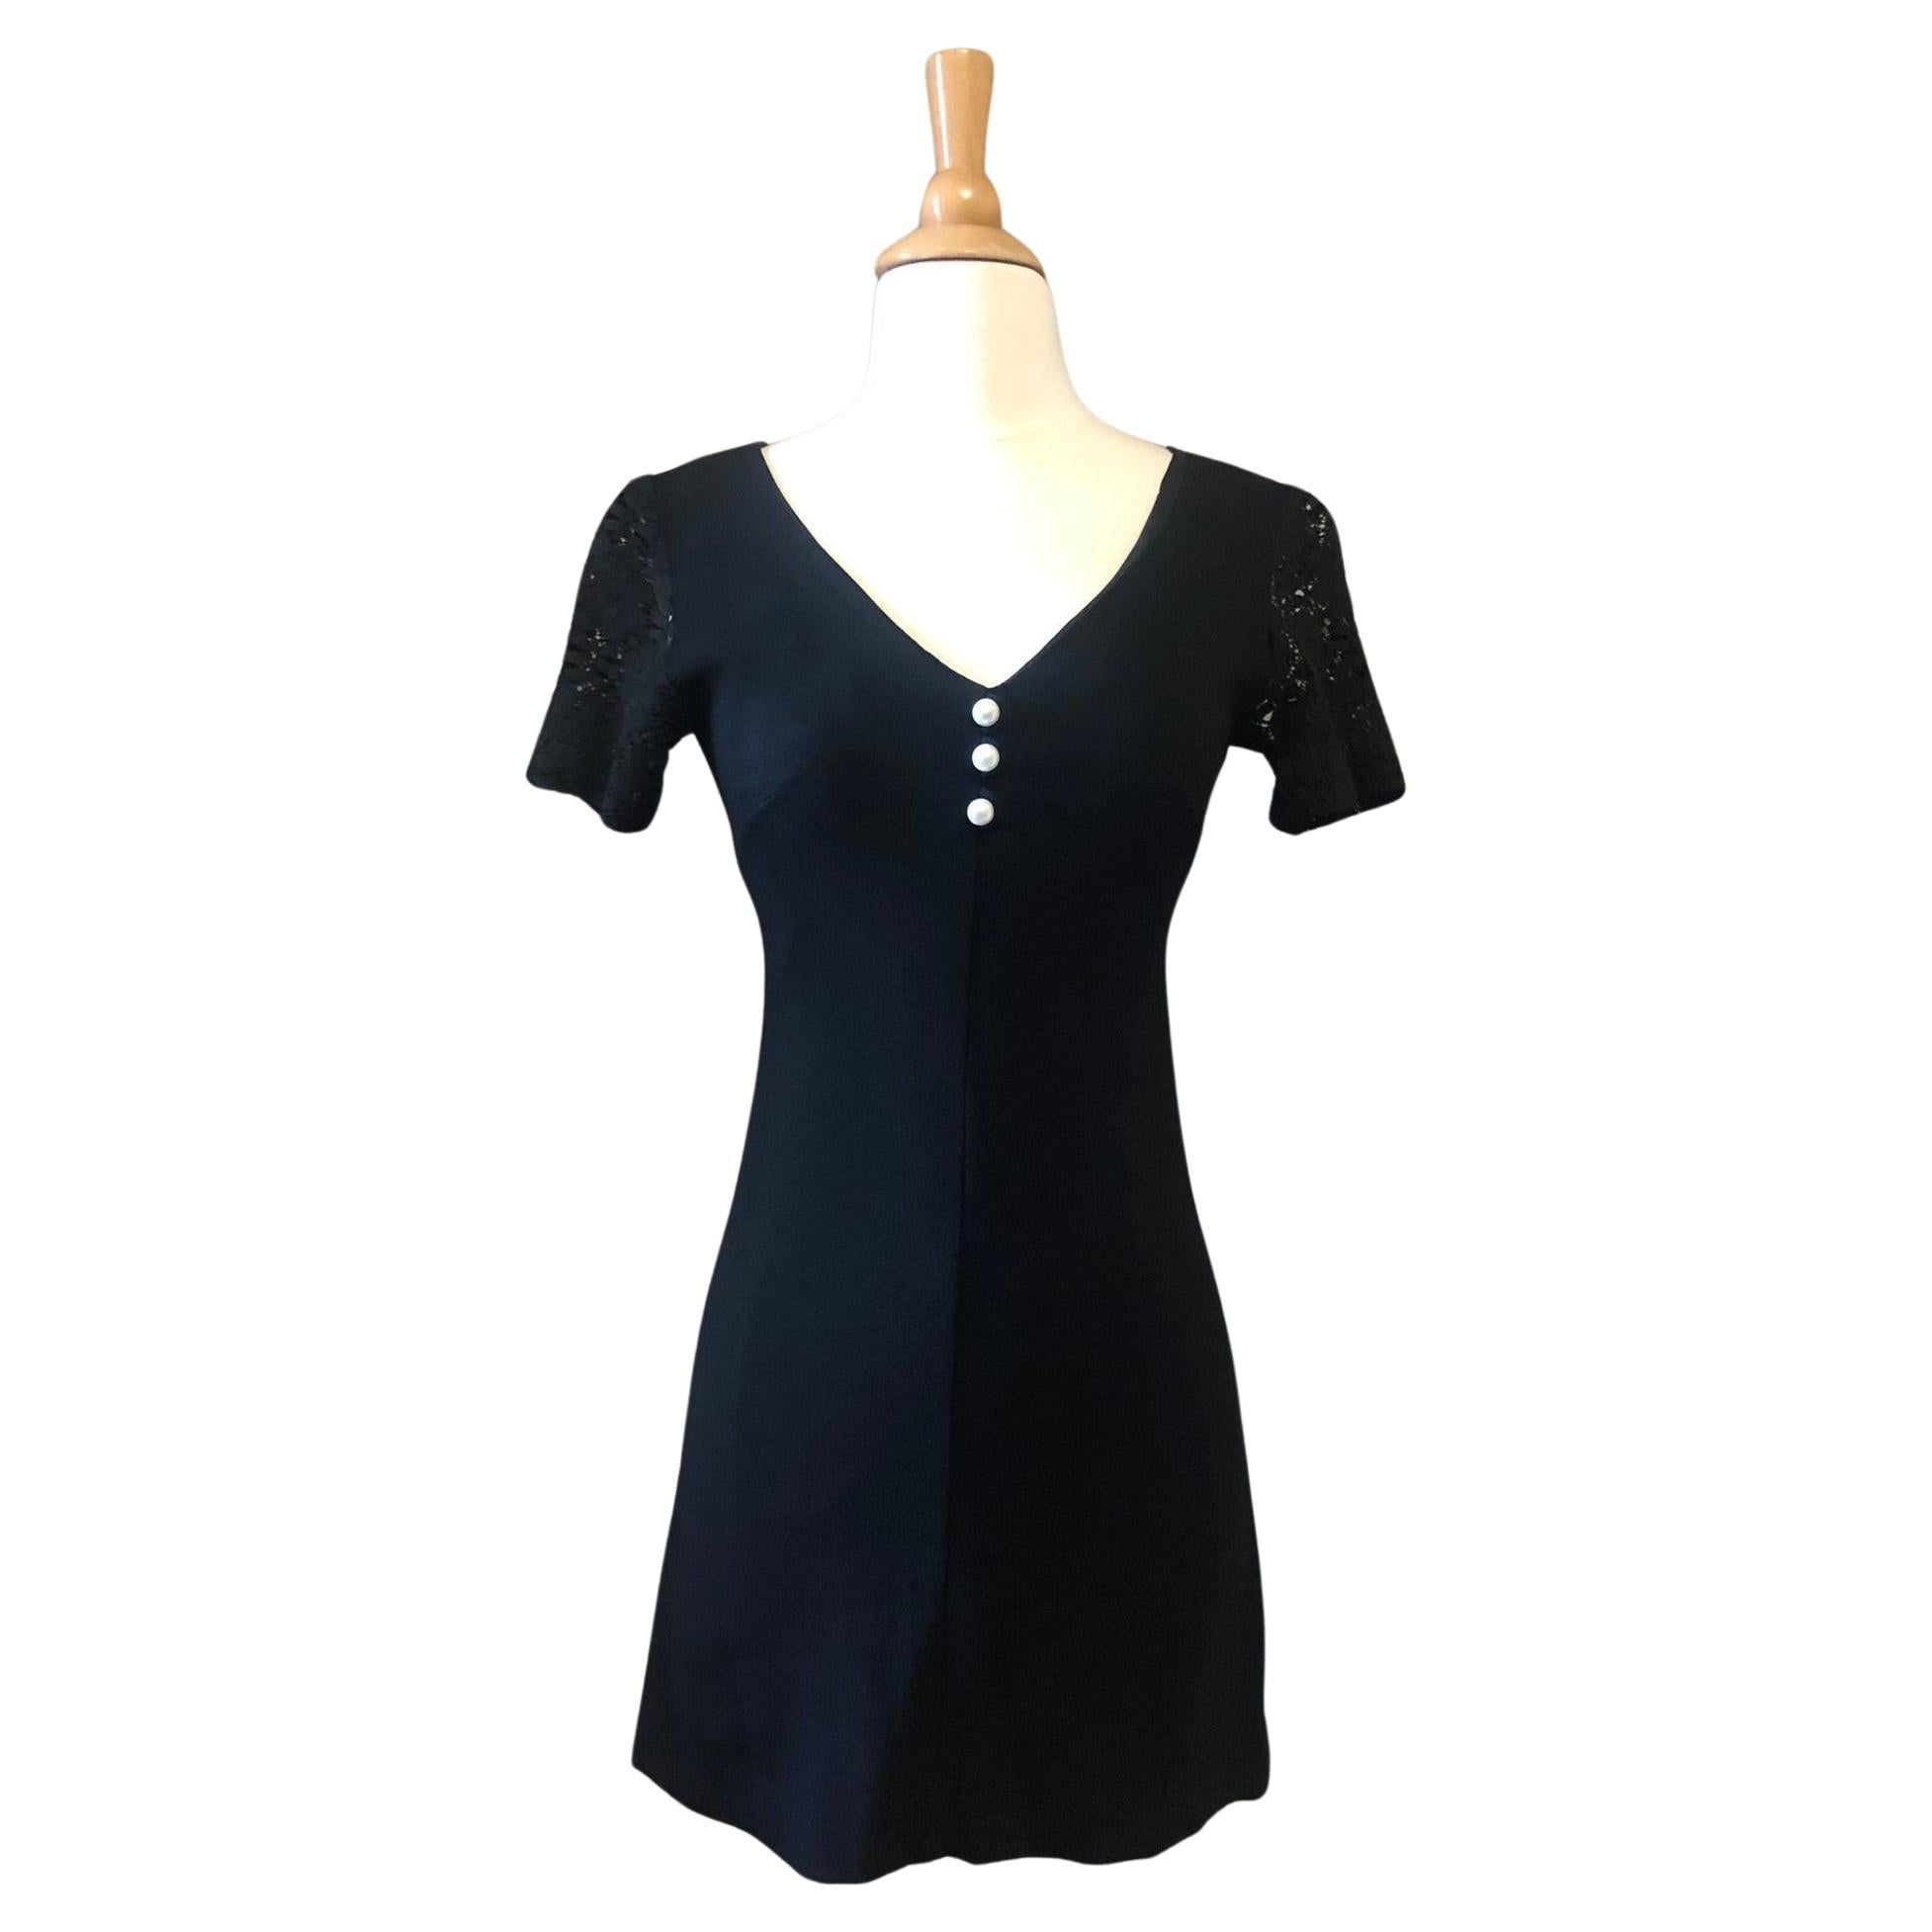 Radley of London Black Mini Dress, Circa 1960s For Sale